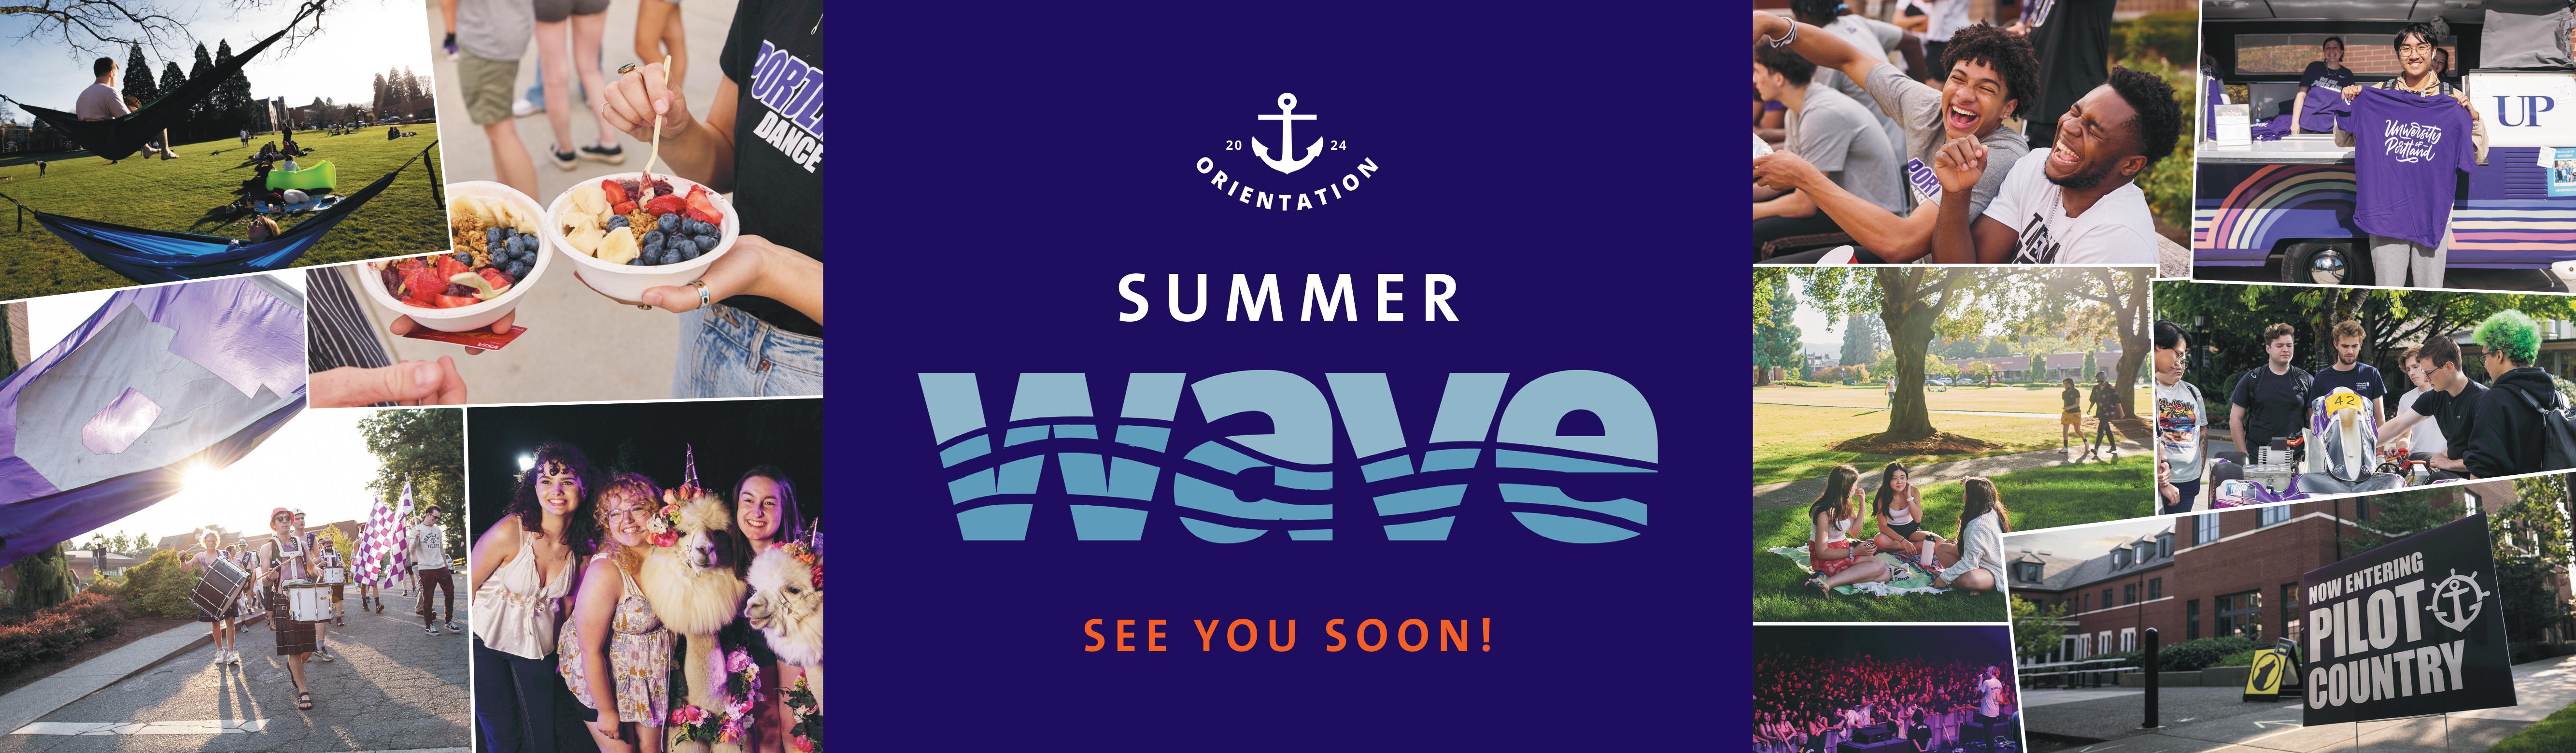 summer-wave-banner